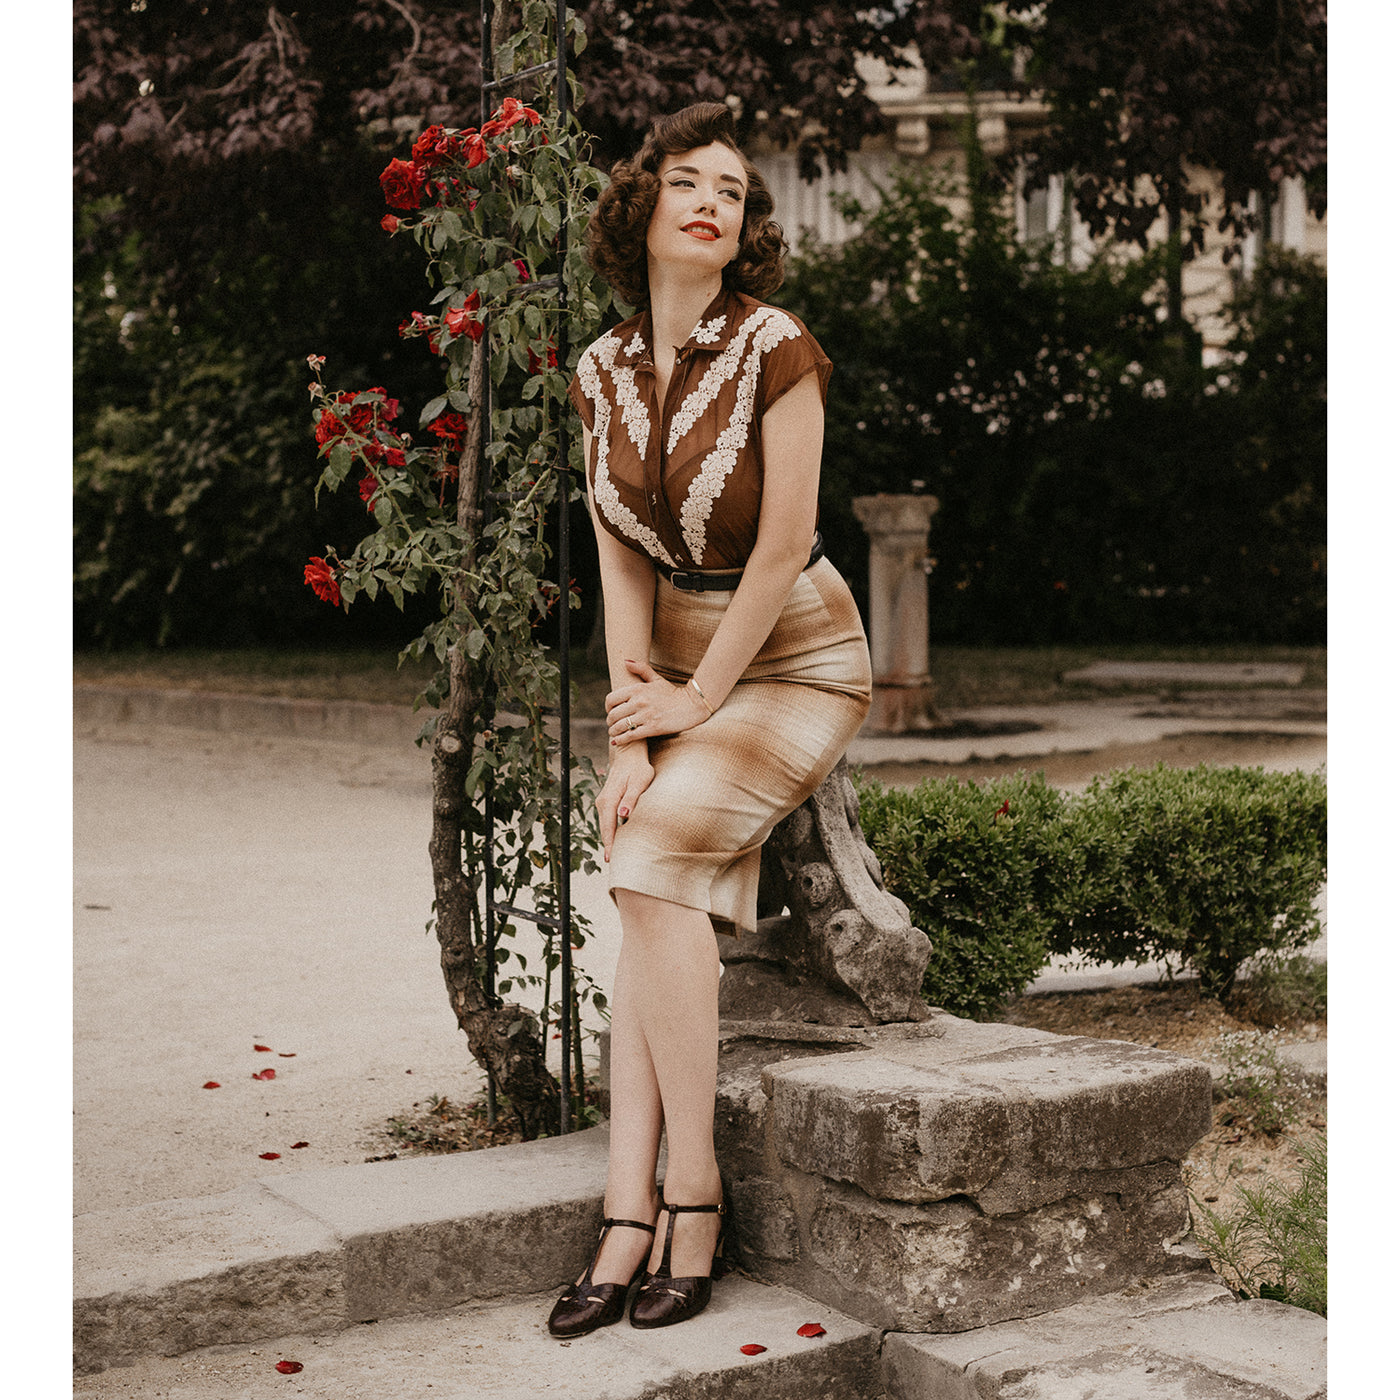 Charlie Stone Vintage Inspired Heels Retro 1940’s 1950’s Style Ladies Shoes crocodile leather espresso